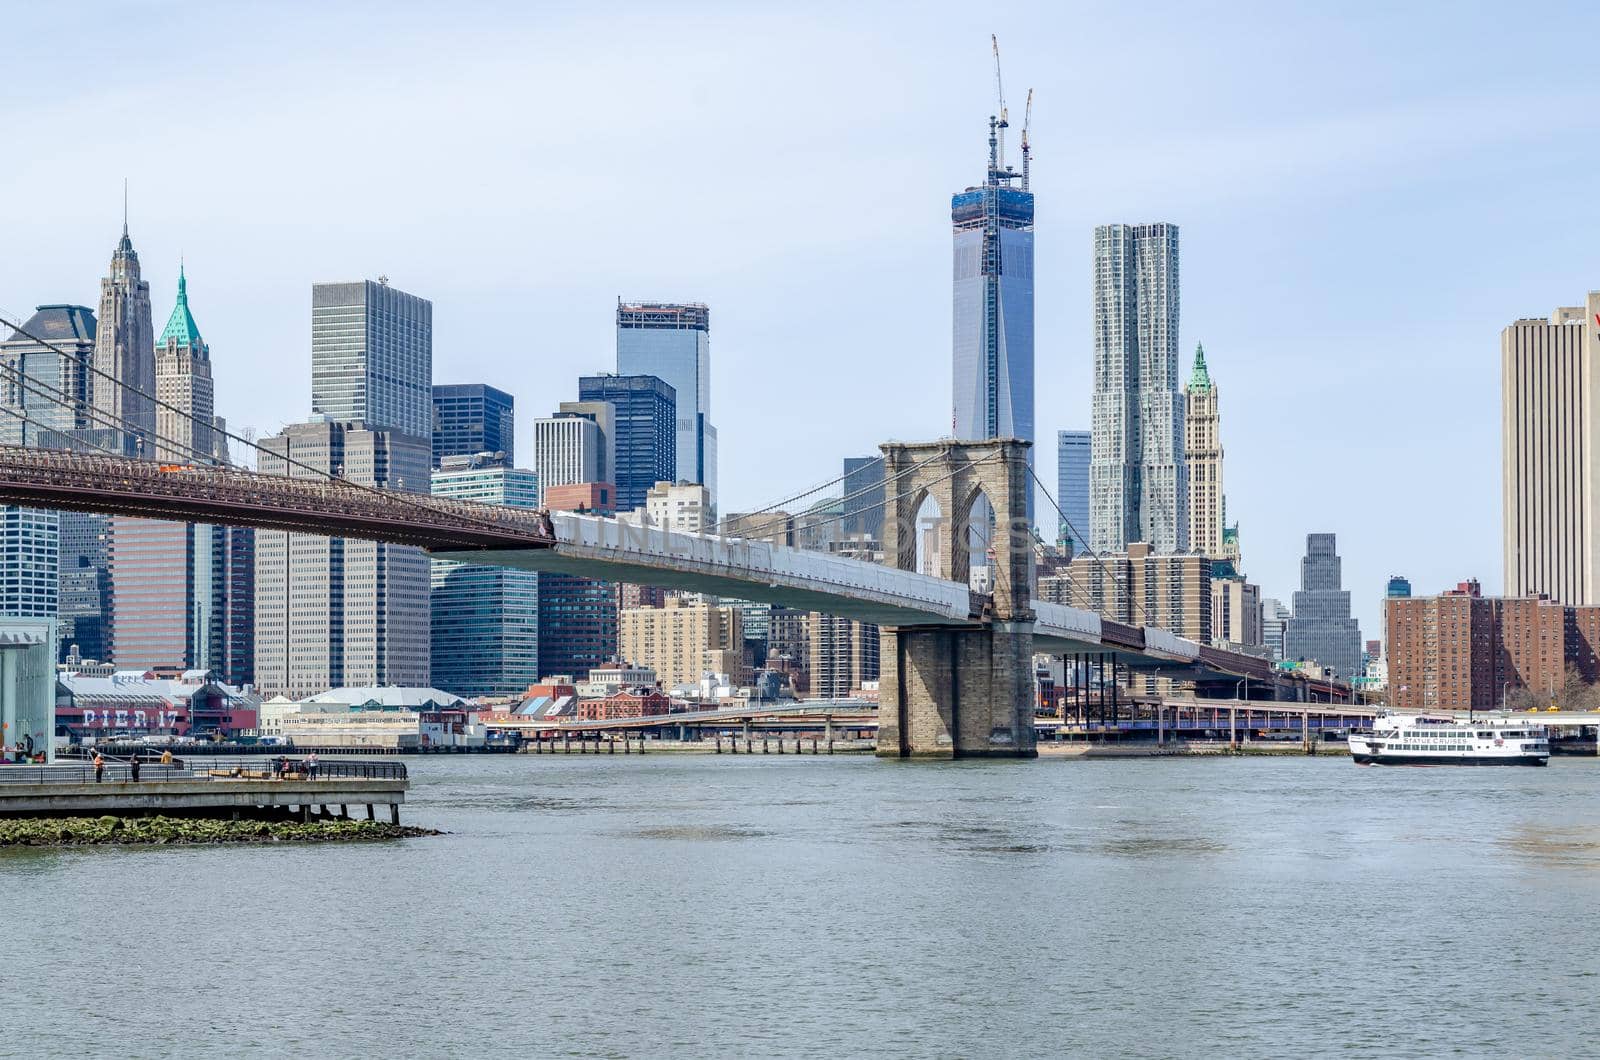 Brooklyn Bridge New York City and Hudson river with Manhattan Skyline in the Background by bildgigant